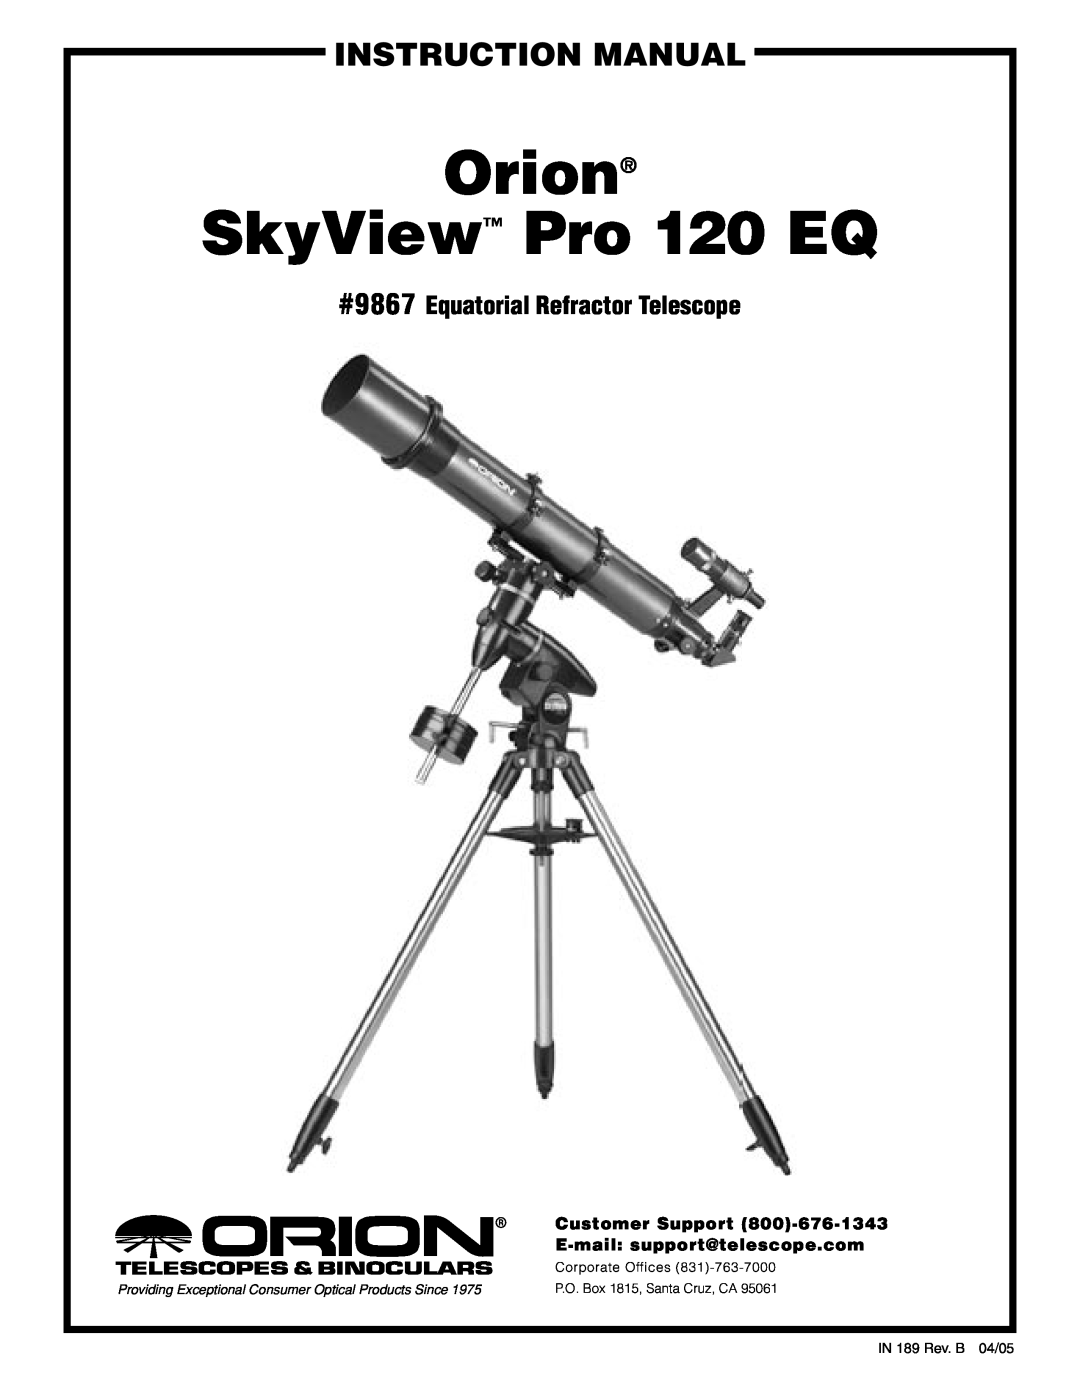 Orion PRO 120 EQ instruction manual #9867 Equatorial Refractor Telescope, Customer Support, E-mail support@telescope.com 